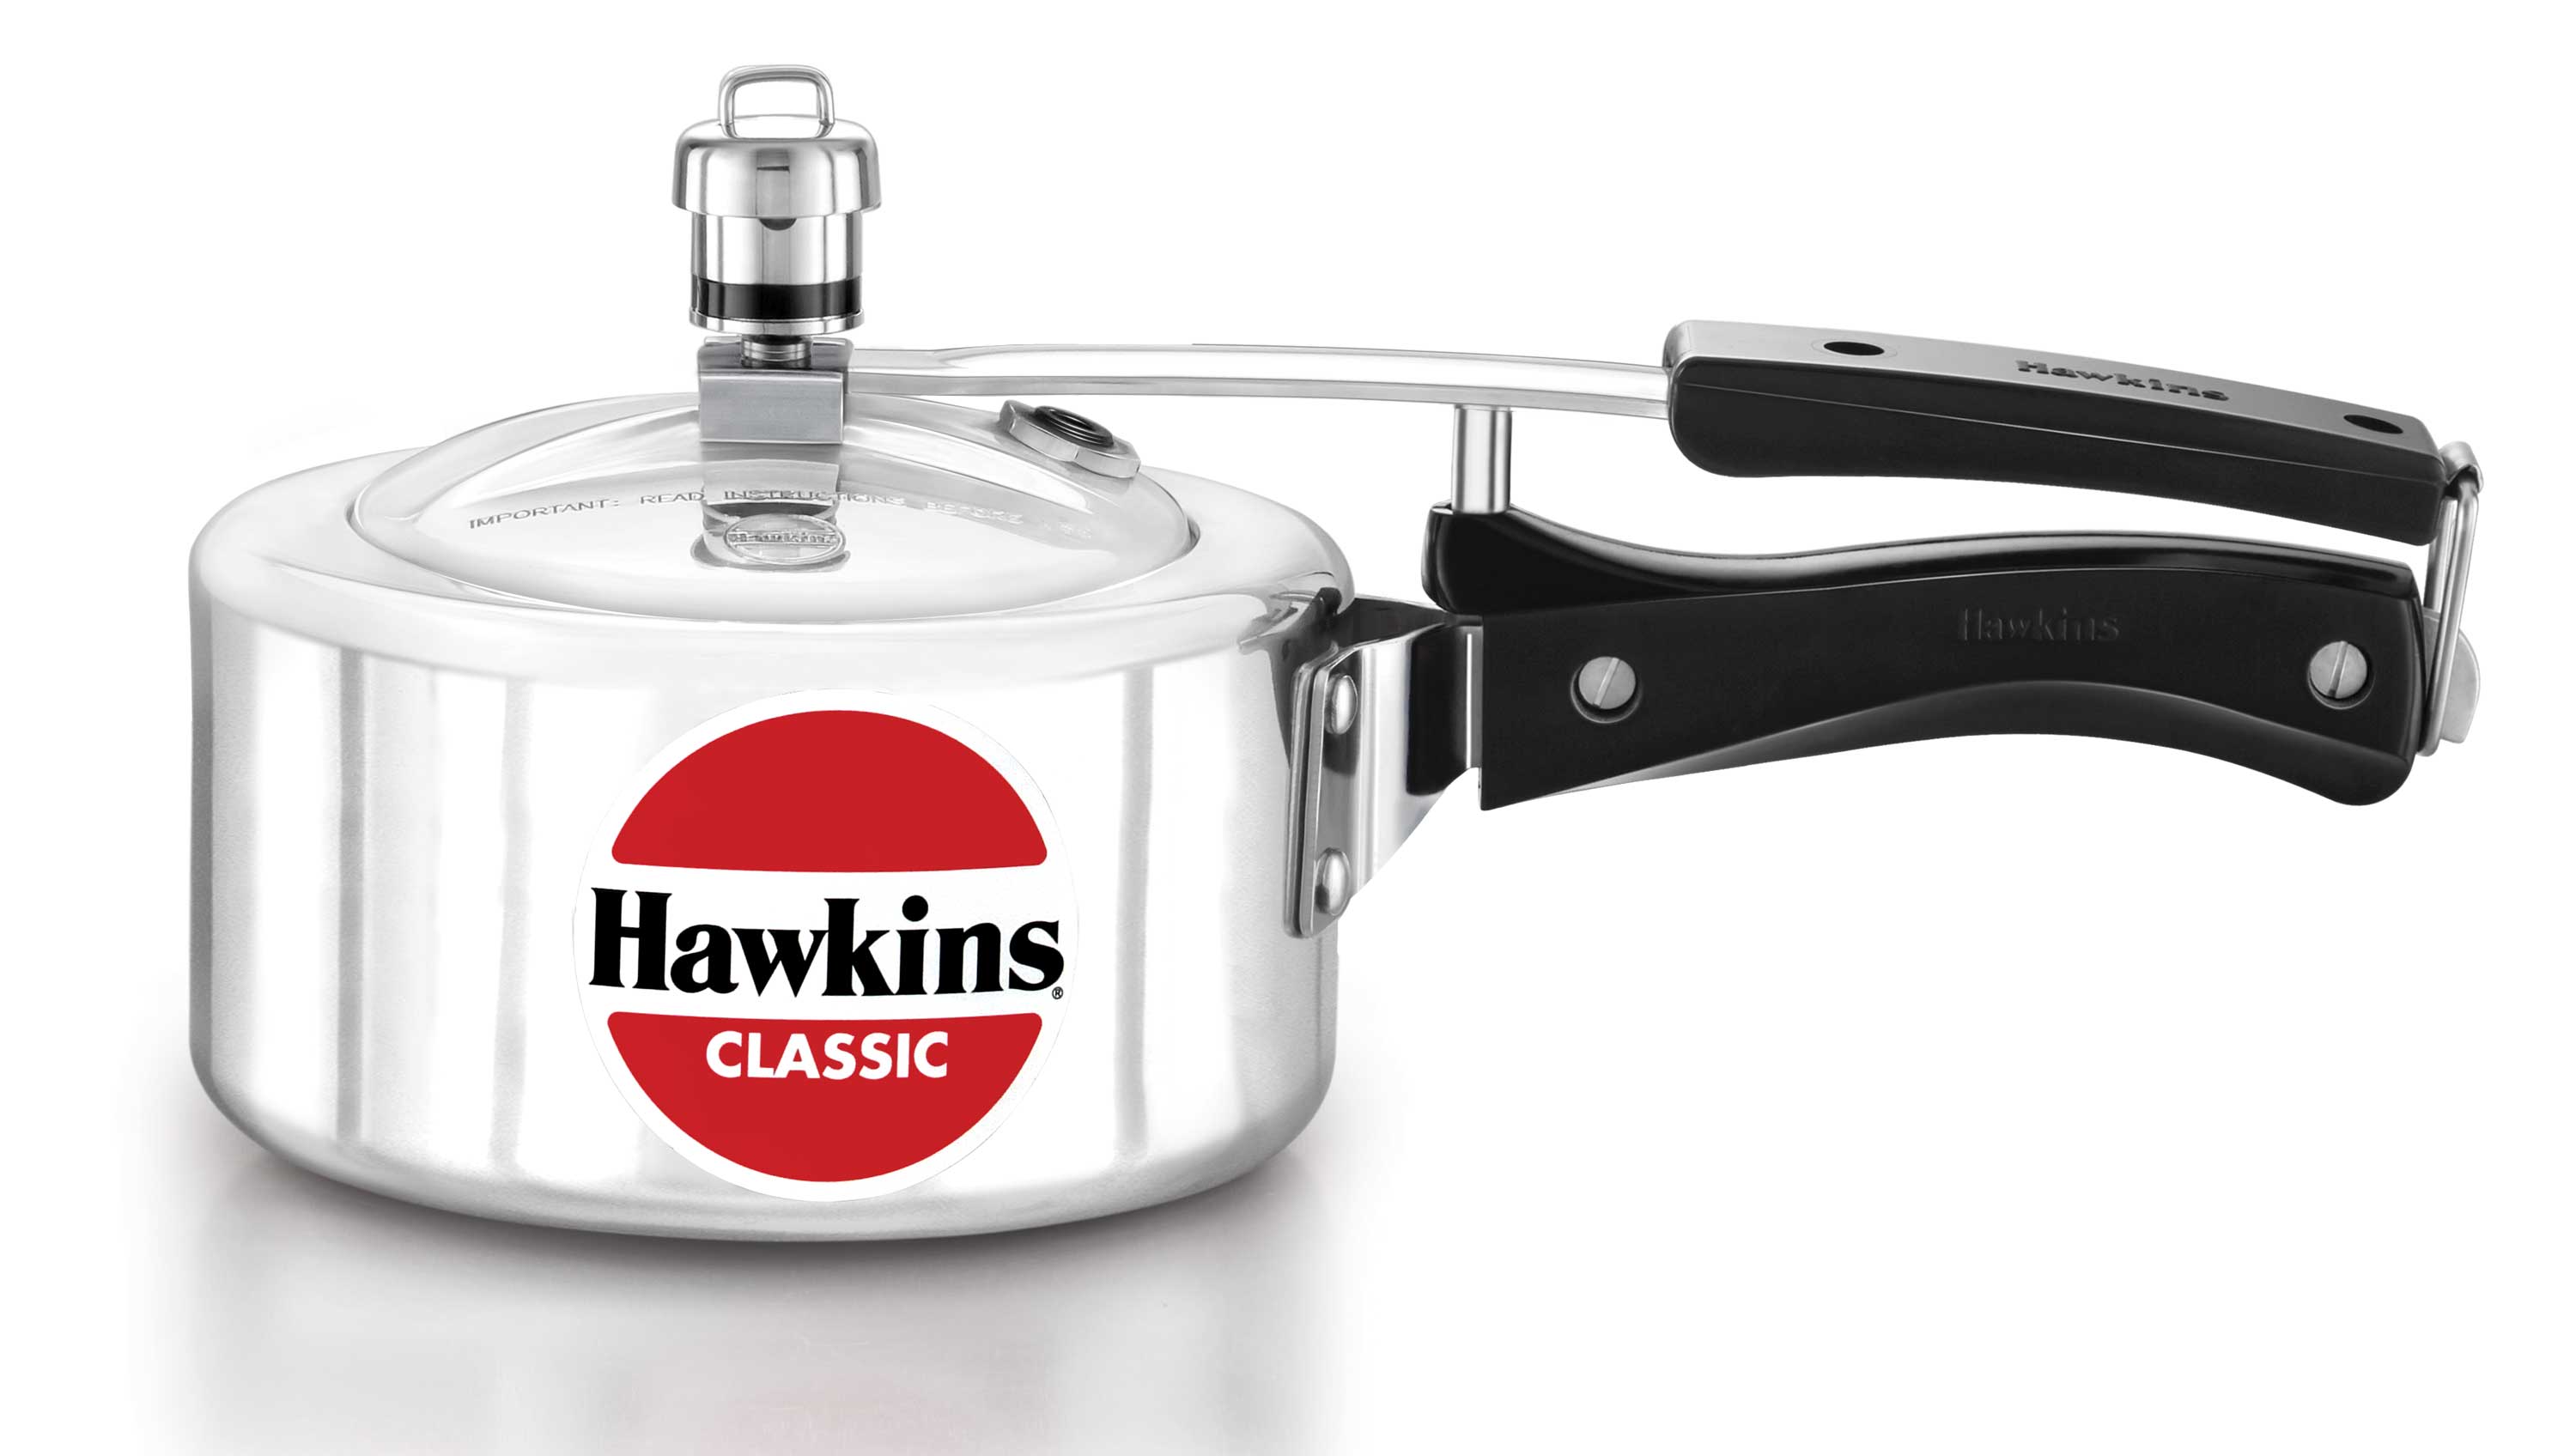 Hawkins (CL15) 1.5 Liter Classic Aluminum Pressure Cooker